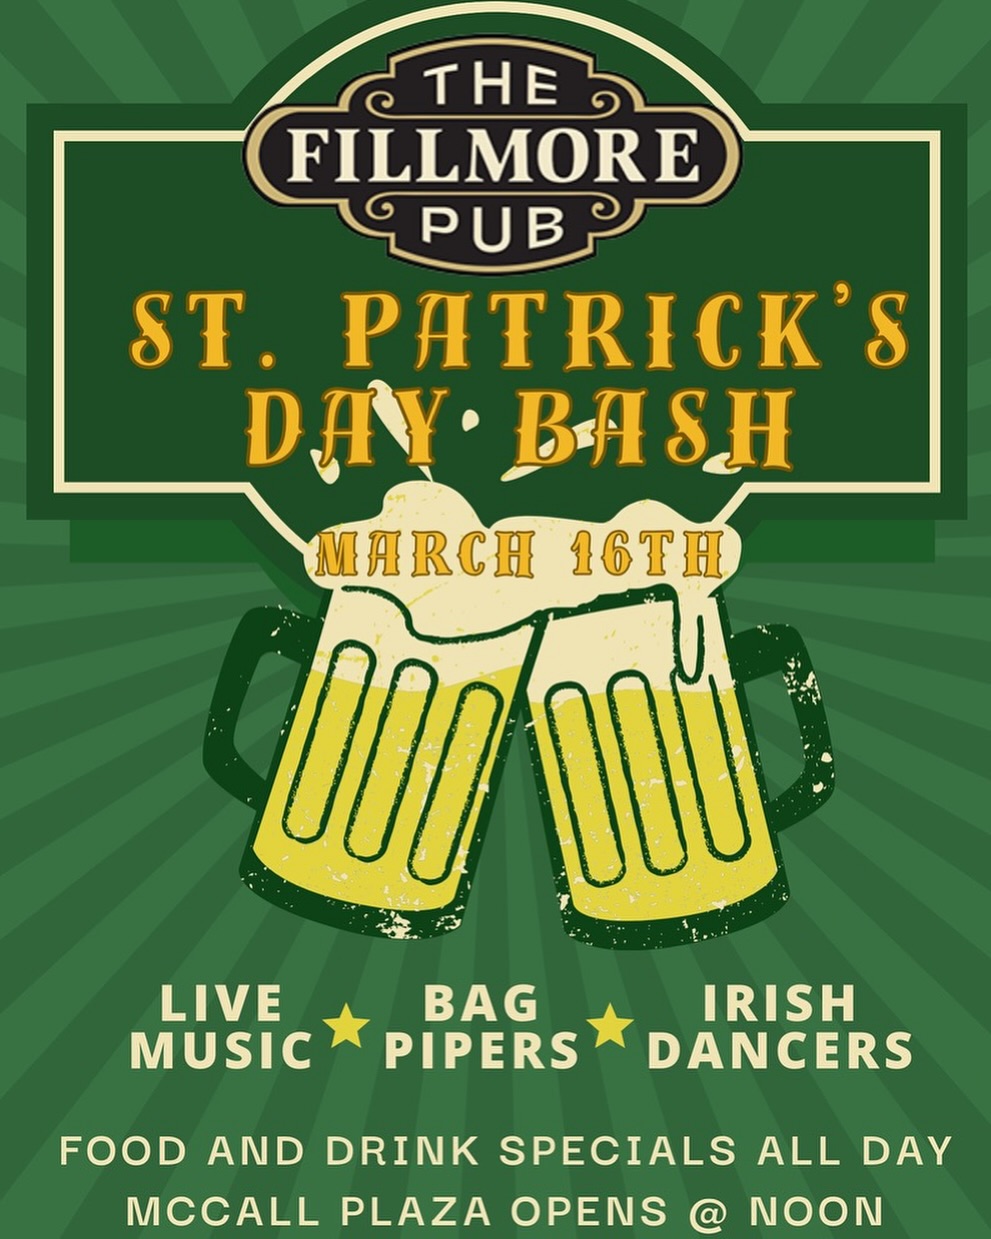 St Patrick's Day Bash at Fillmore